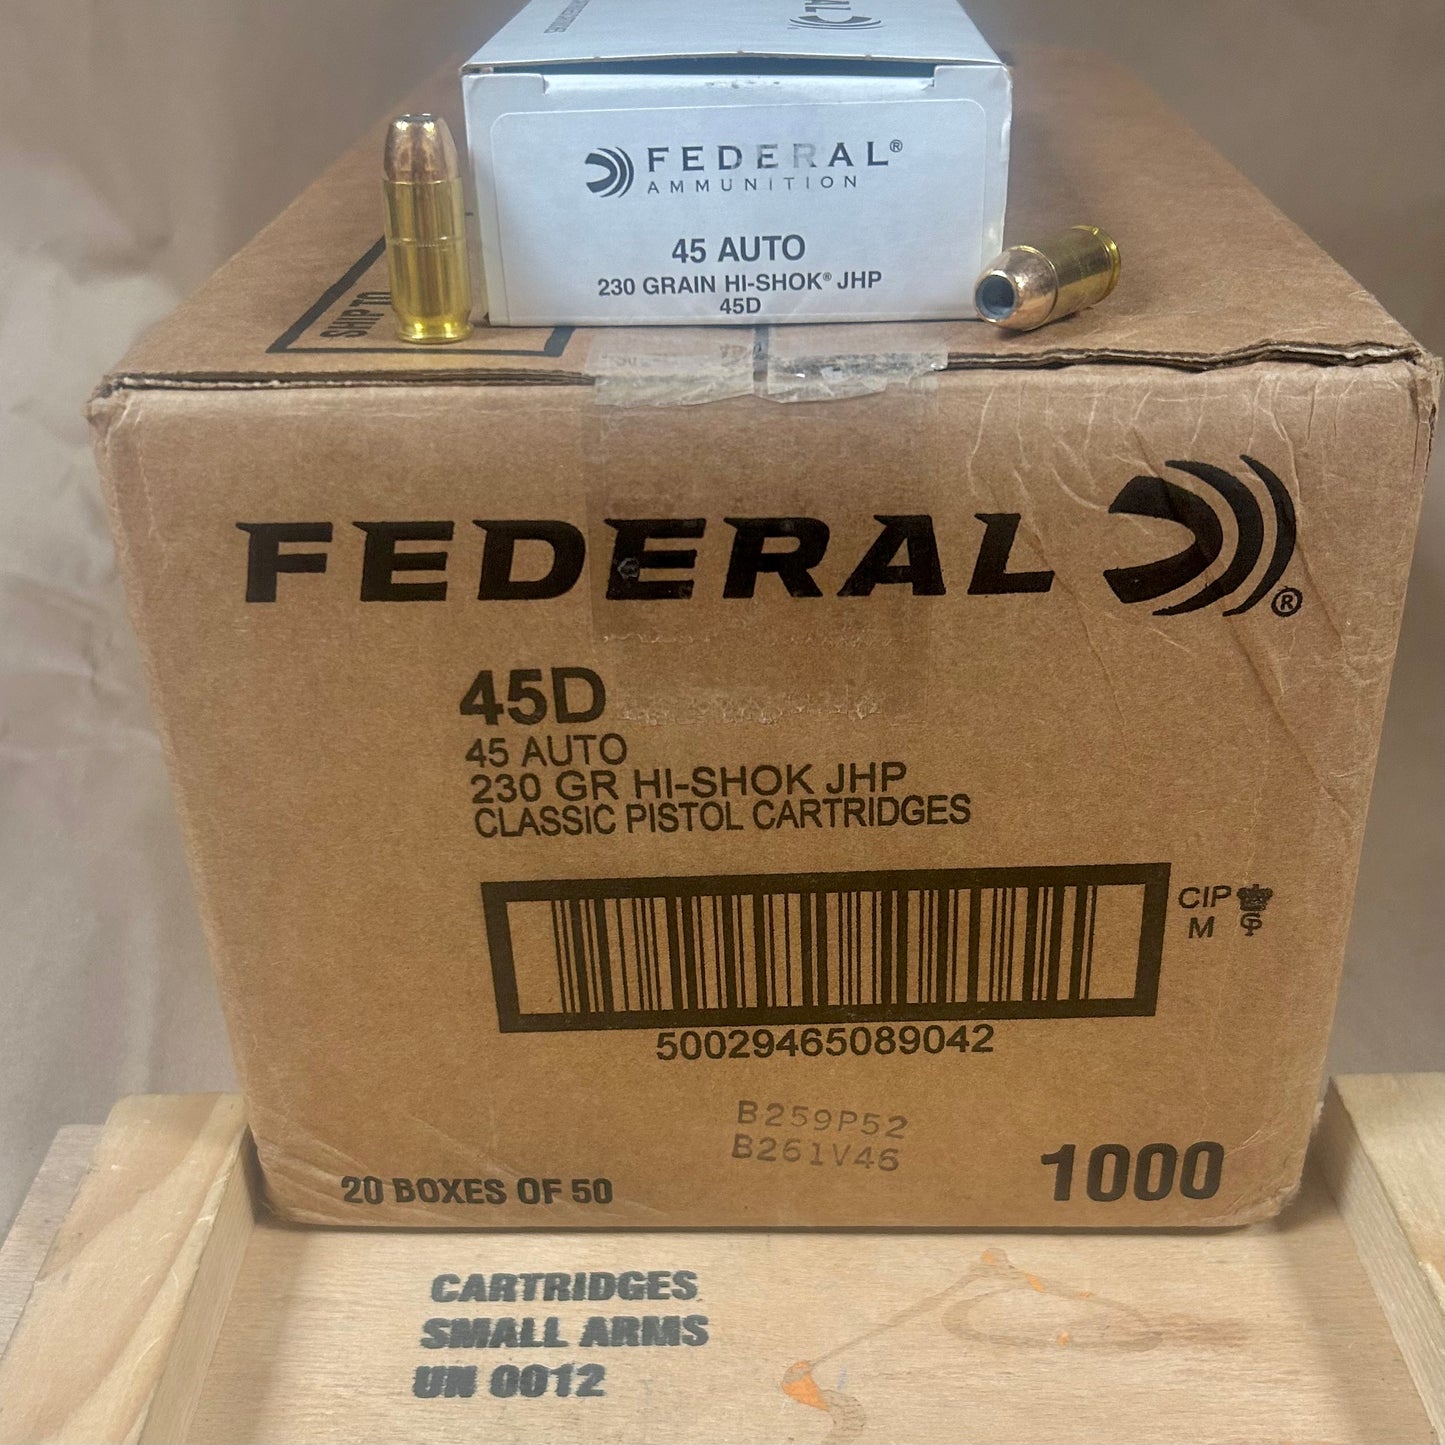 Free Shipping - 1000 Round Case Federal Classic Hi-Shok .45 ACP / Auto Ammo 230gr JHP - 45D